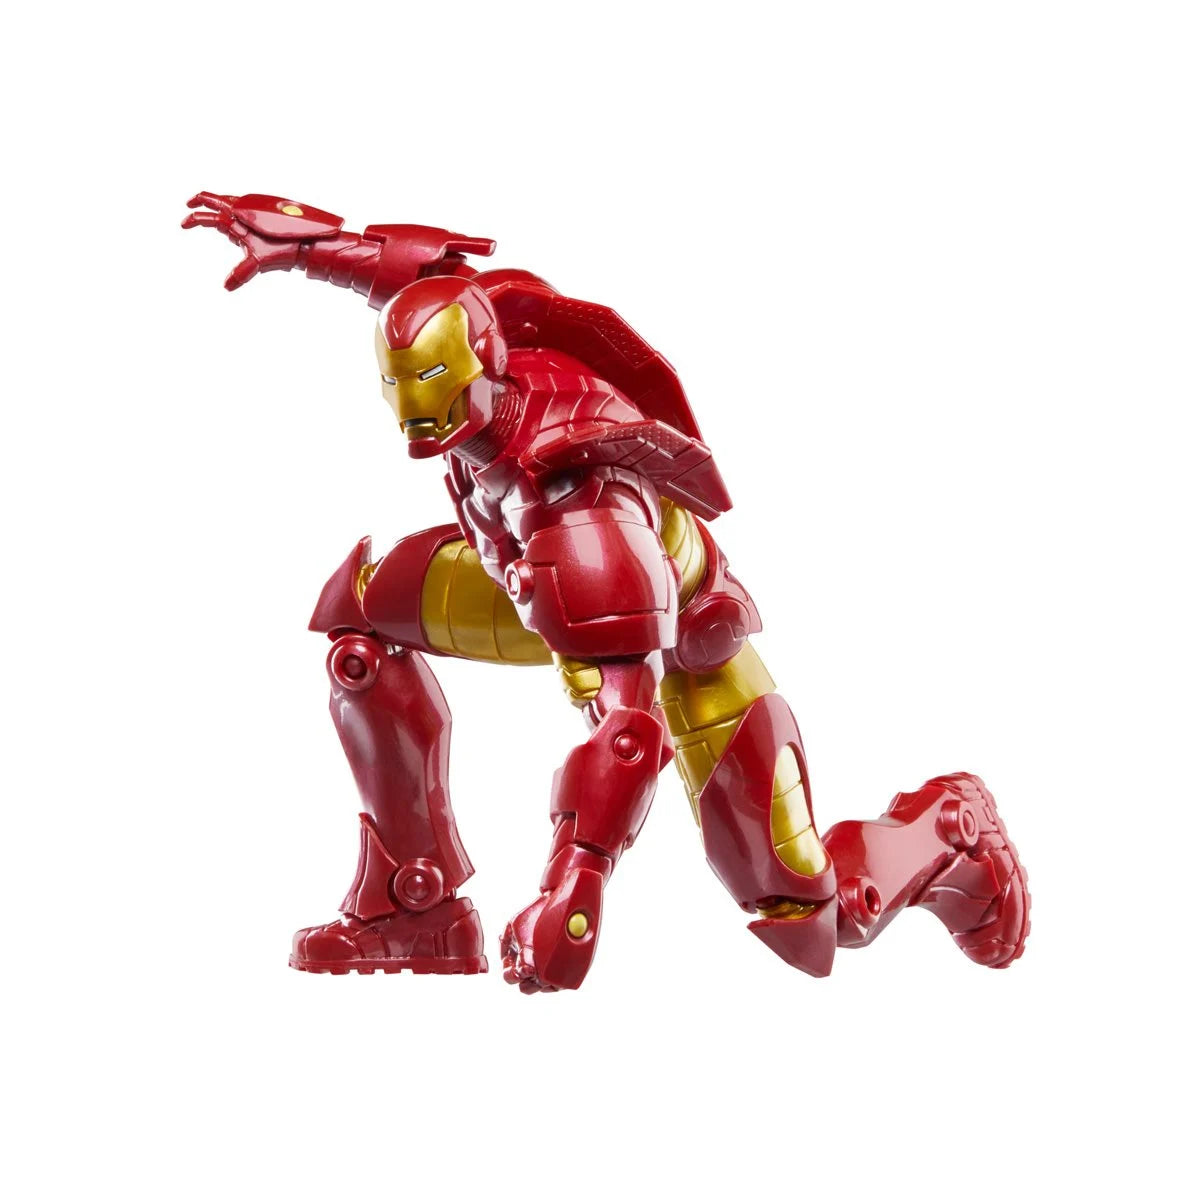 Pre-Order: Iron Man Marvel Legends Iron Man (Model 20) 6-Inch Action Figure